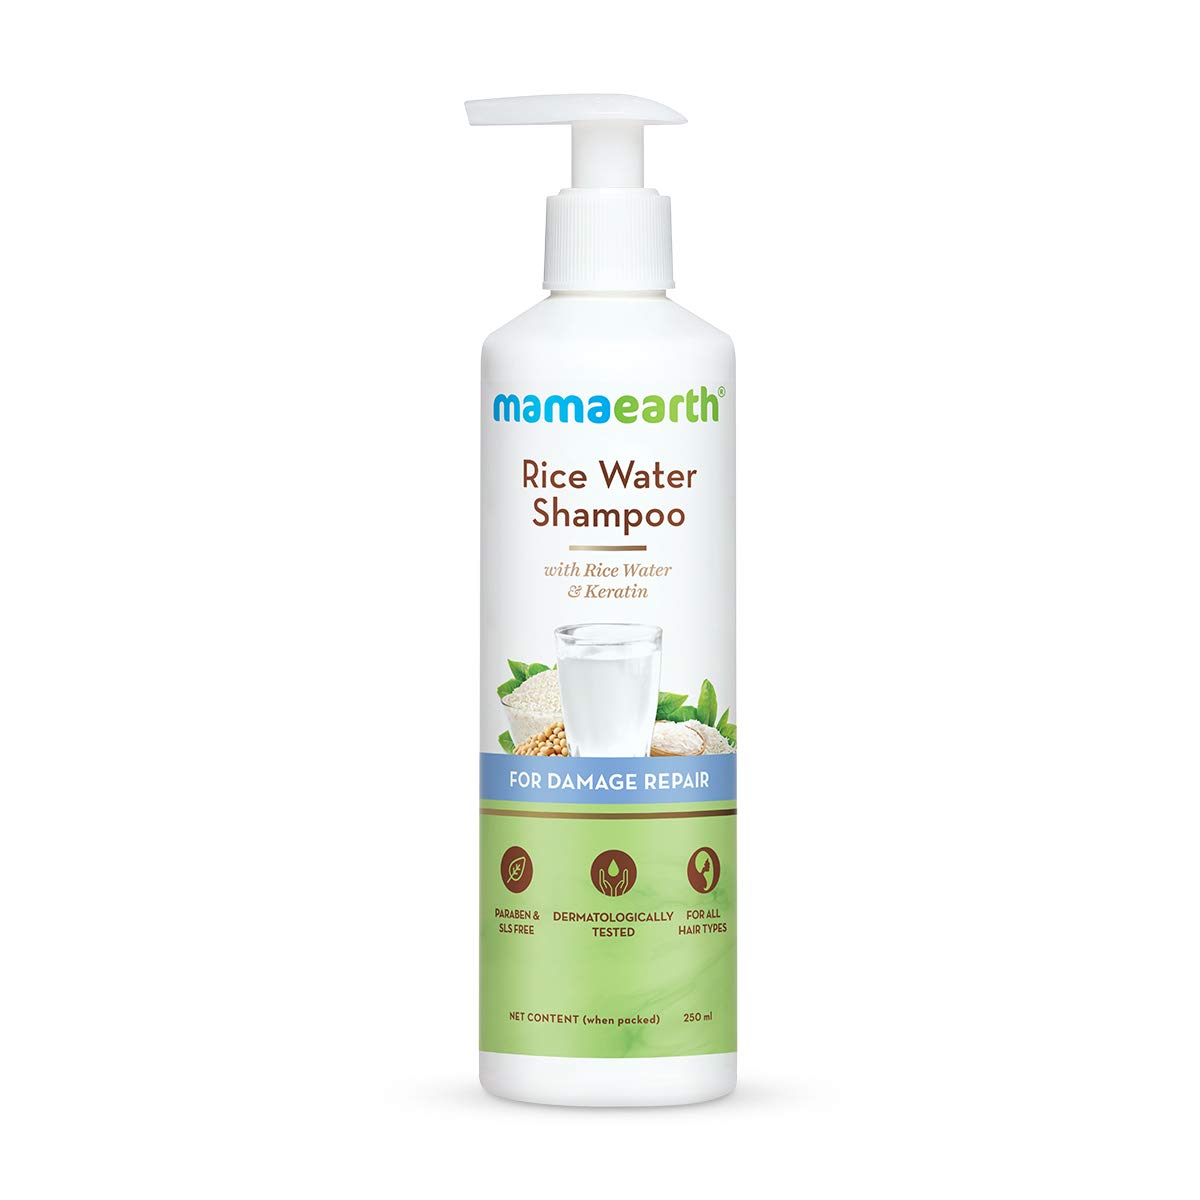 The Mamaearth Rice Water shampoo